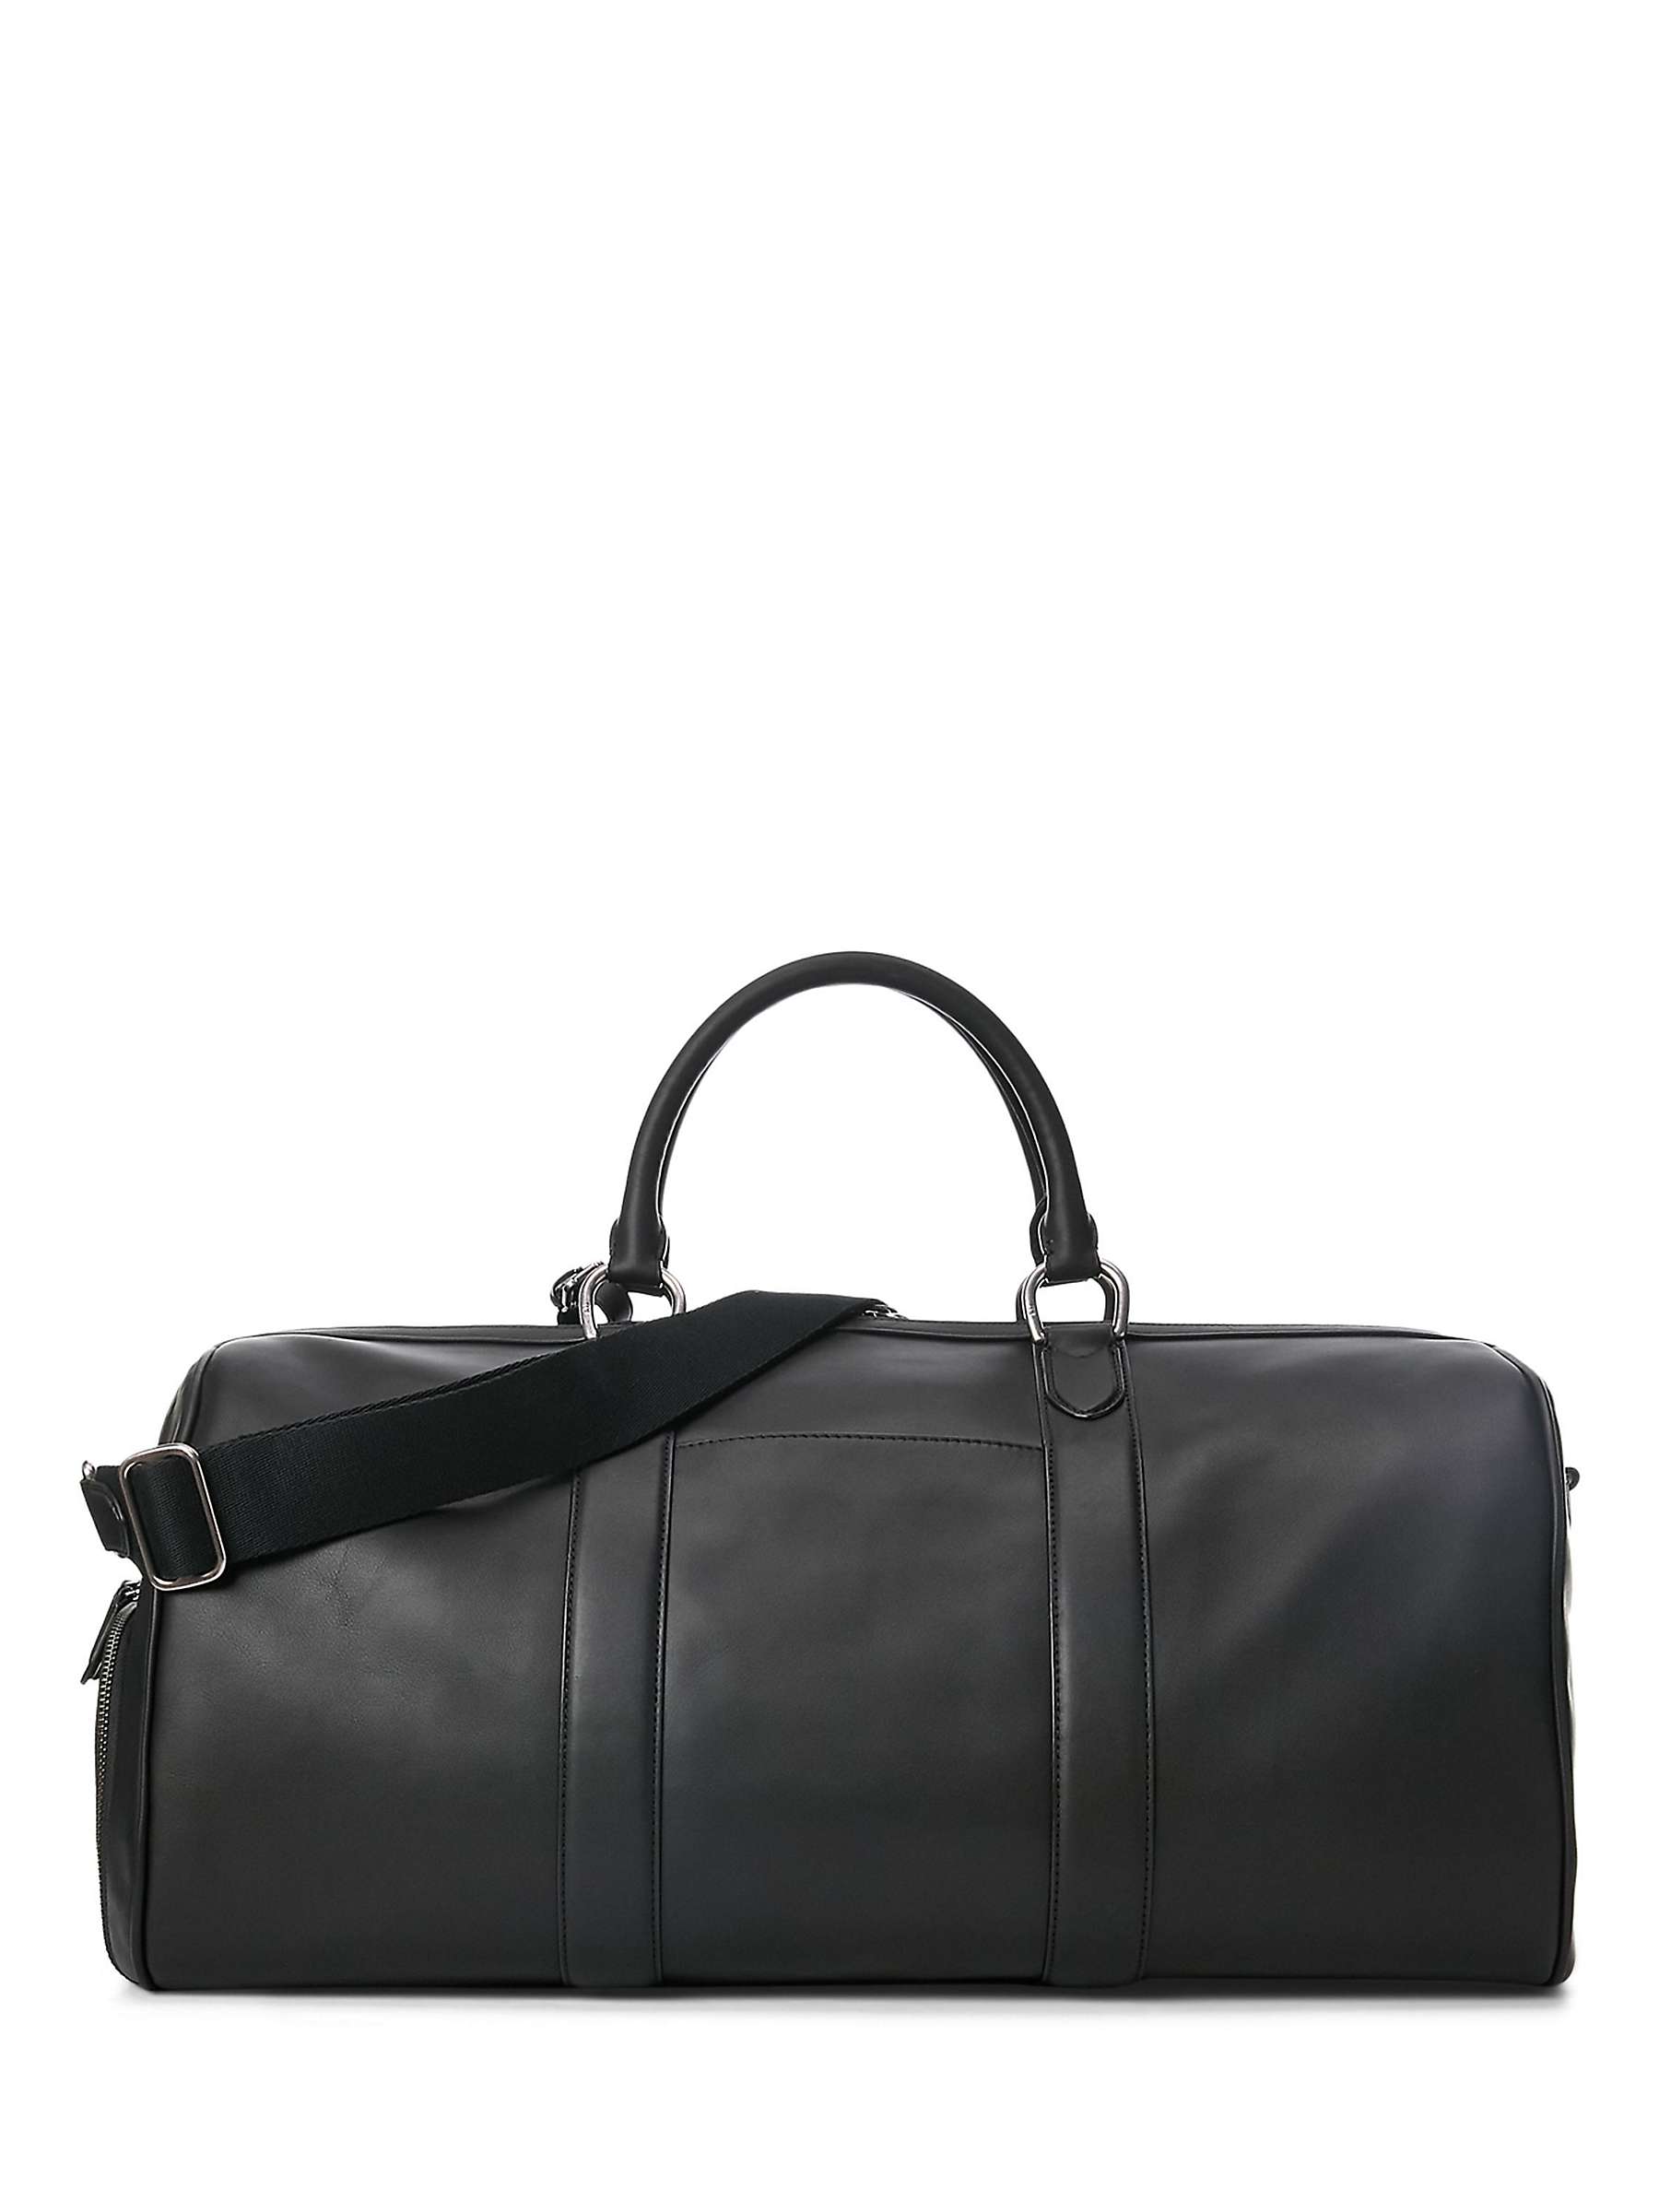 Buy Ralph Lauren Smooth Leather Duffle Bag, Black Online at johnlewis.com